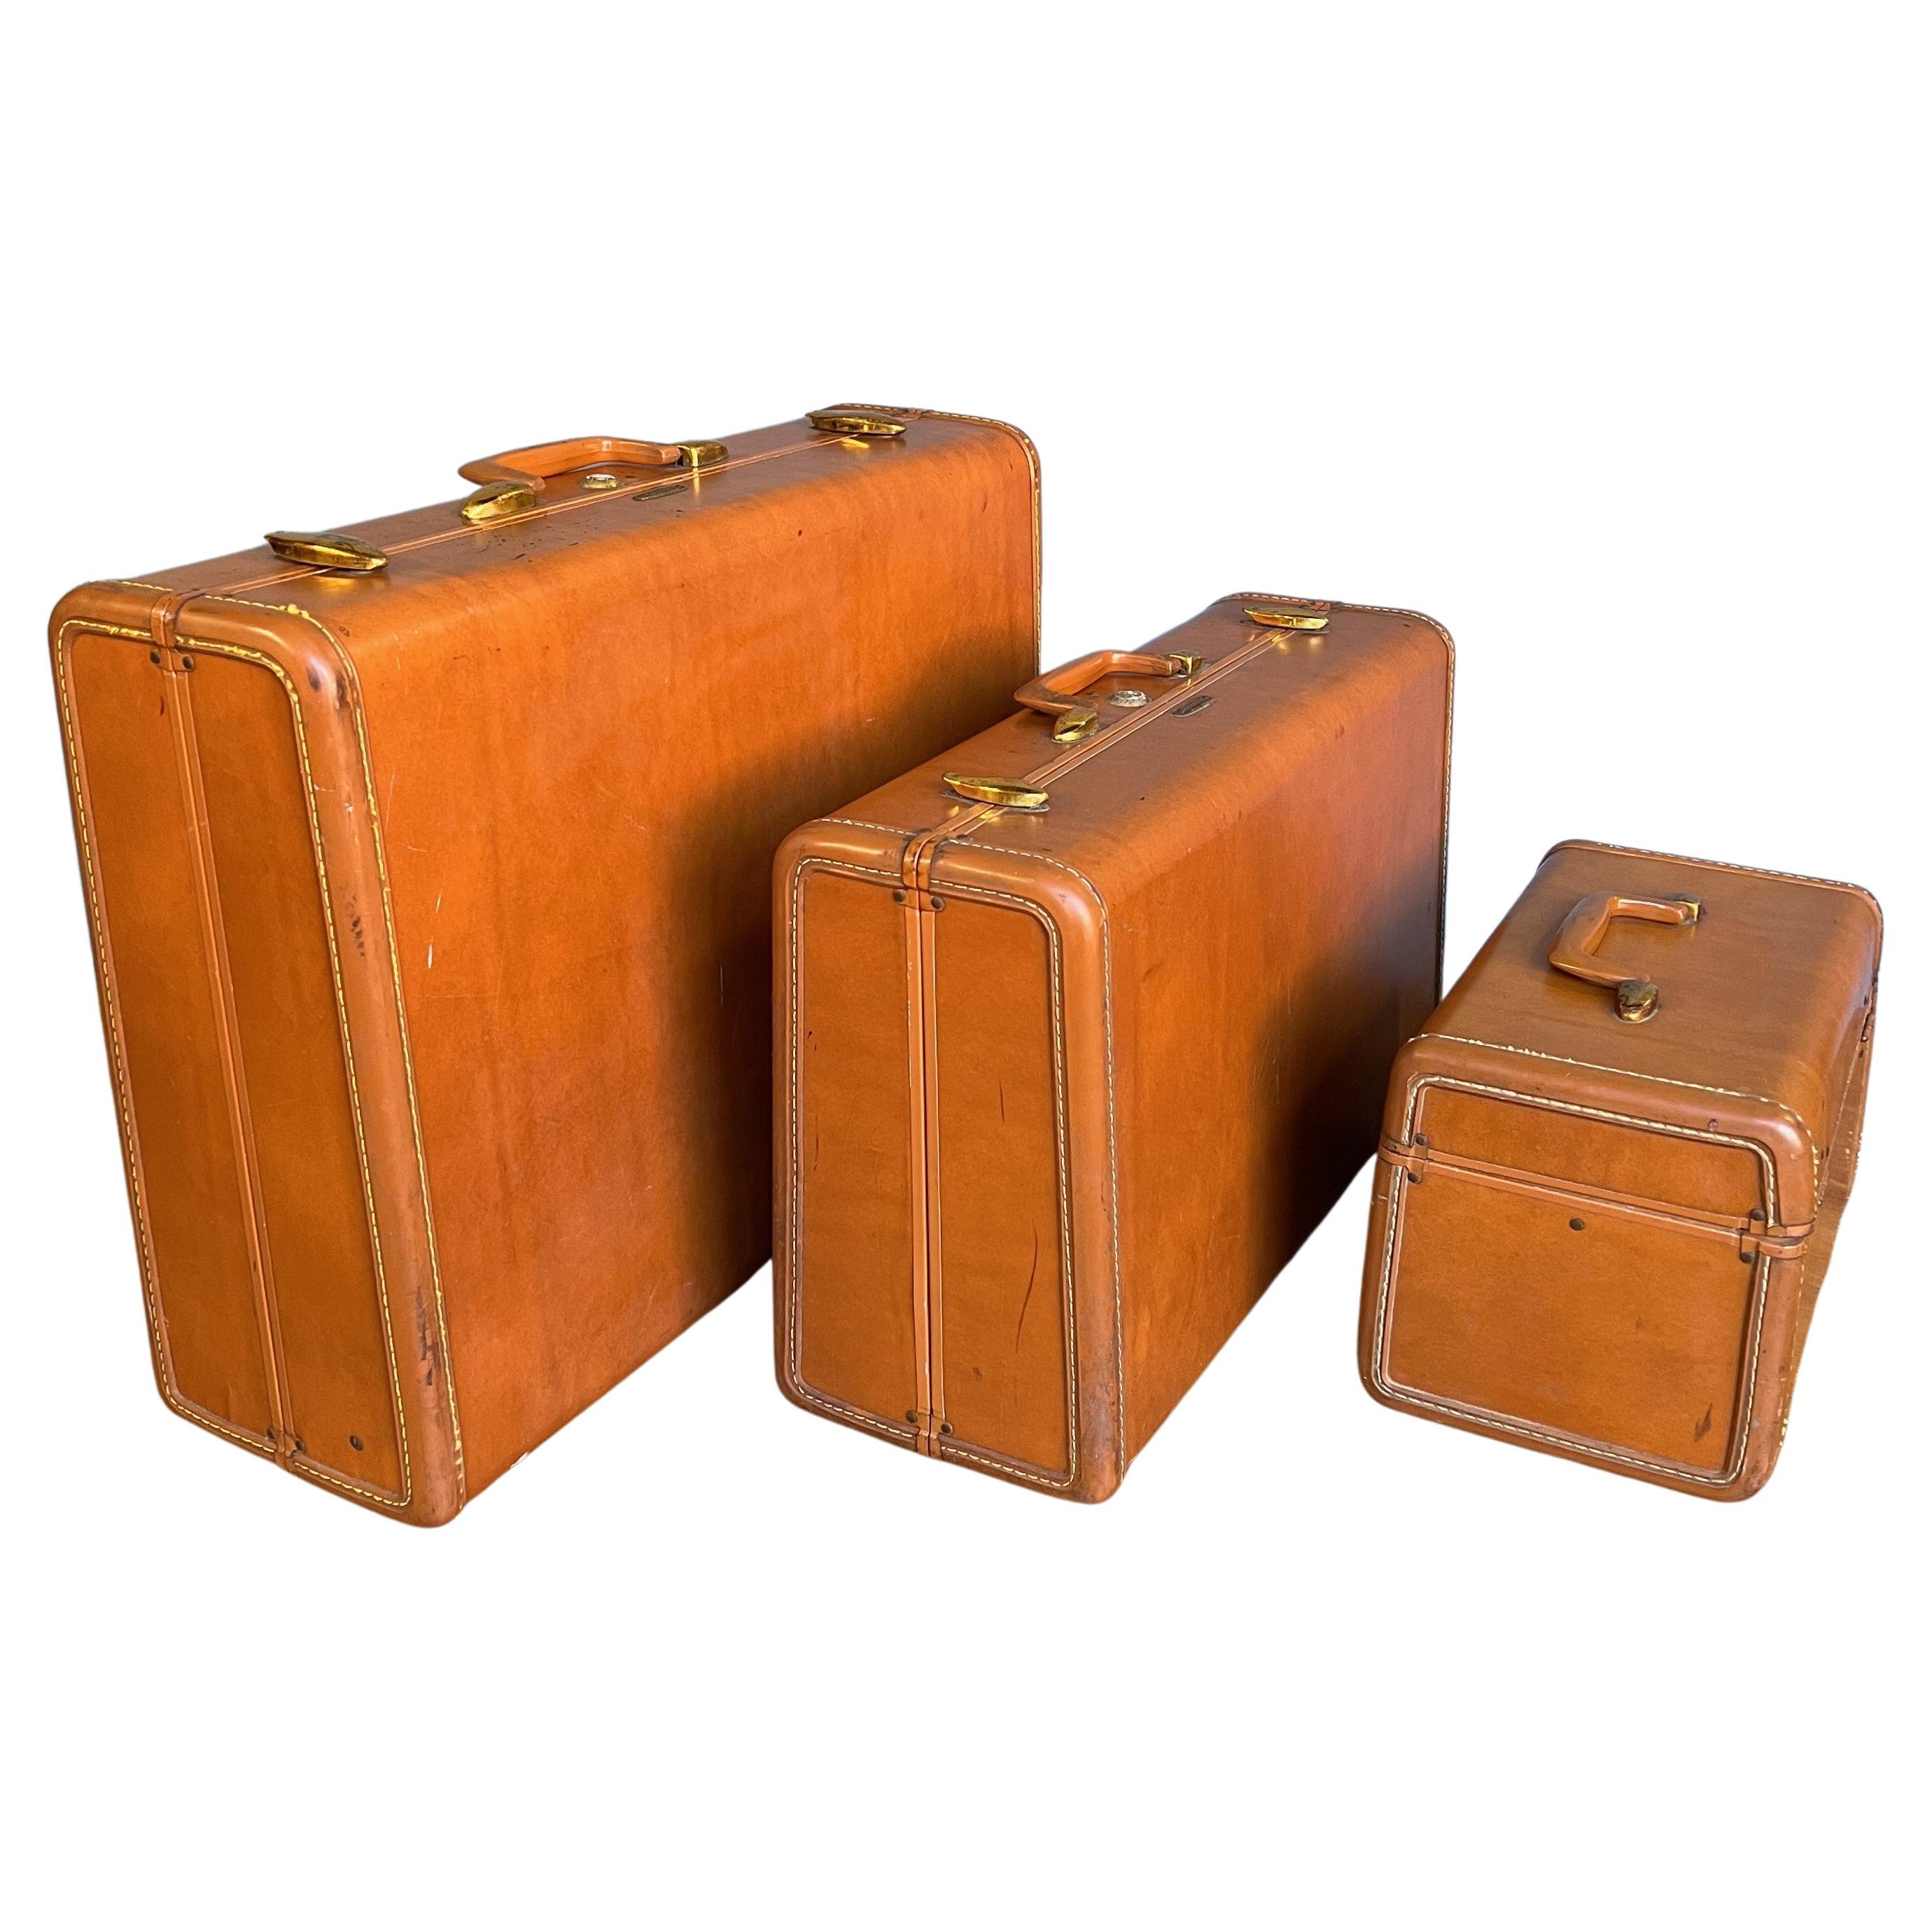 Vintage 1940s Samsonite Streamlite Suitcase Round Hat Box Train Hard Case  for Sale in Palo Alto, CA - OfferUp